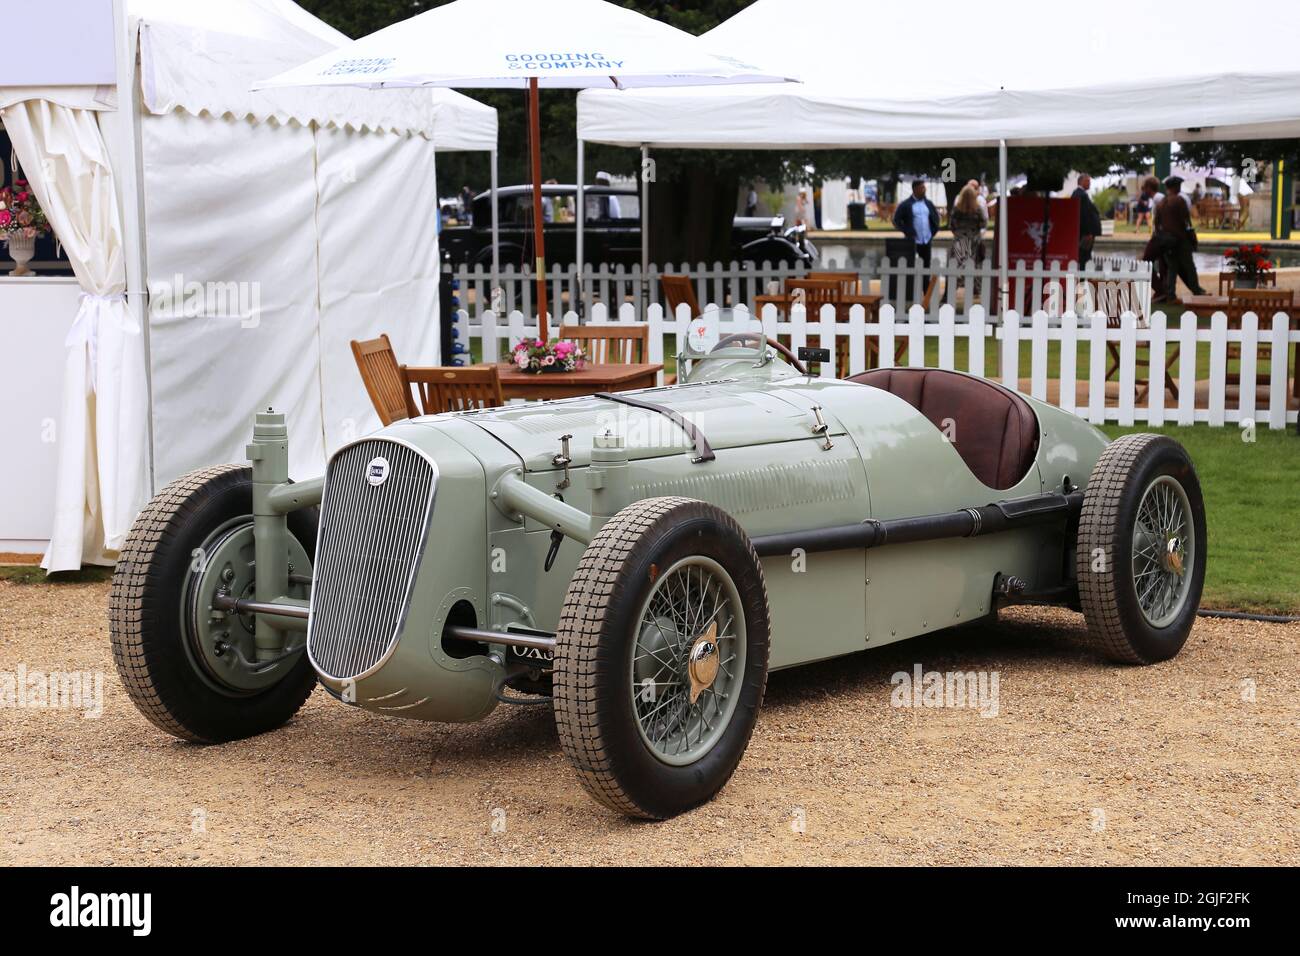 Lancia Dilambda 232 (1933), Concours of Elegance 2021, Hampton court Palace, Londres, Royaume-Uni, Europe Banque D'Images